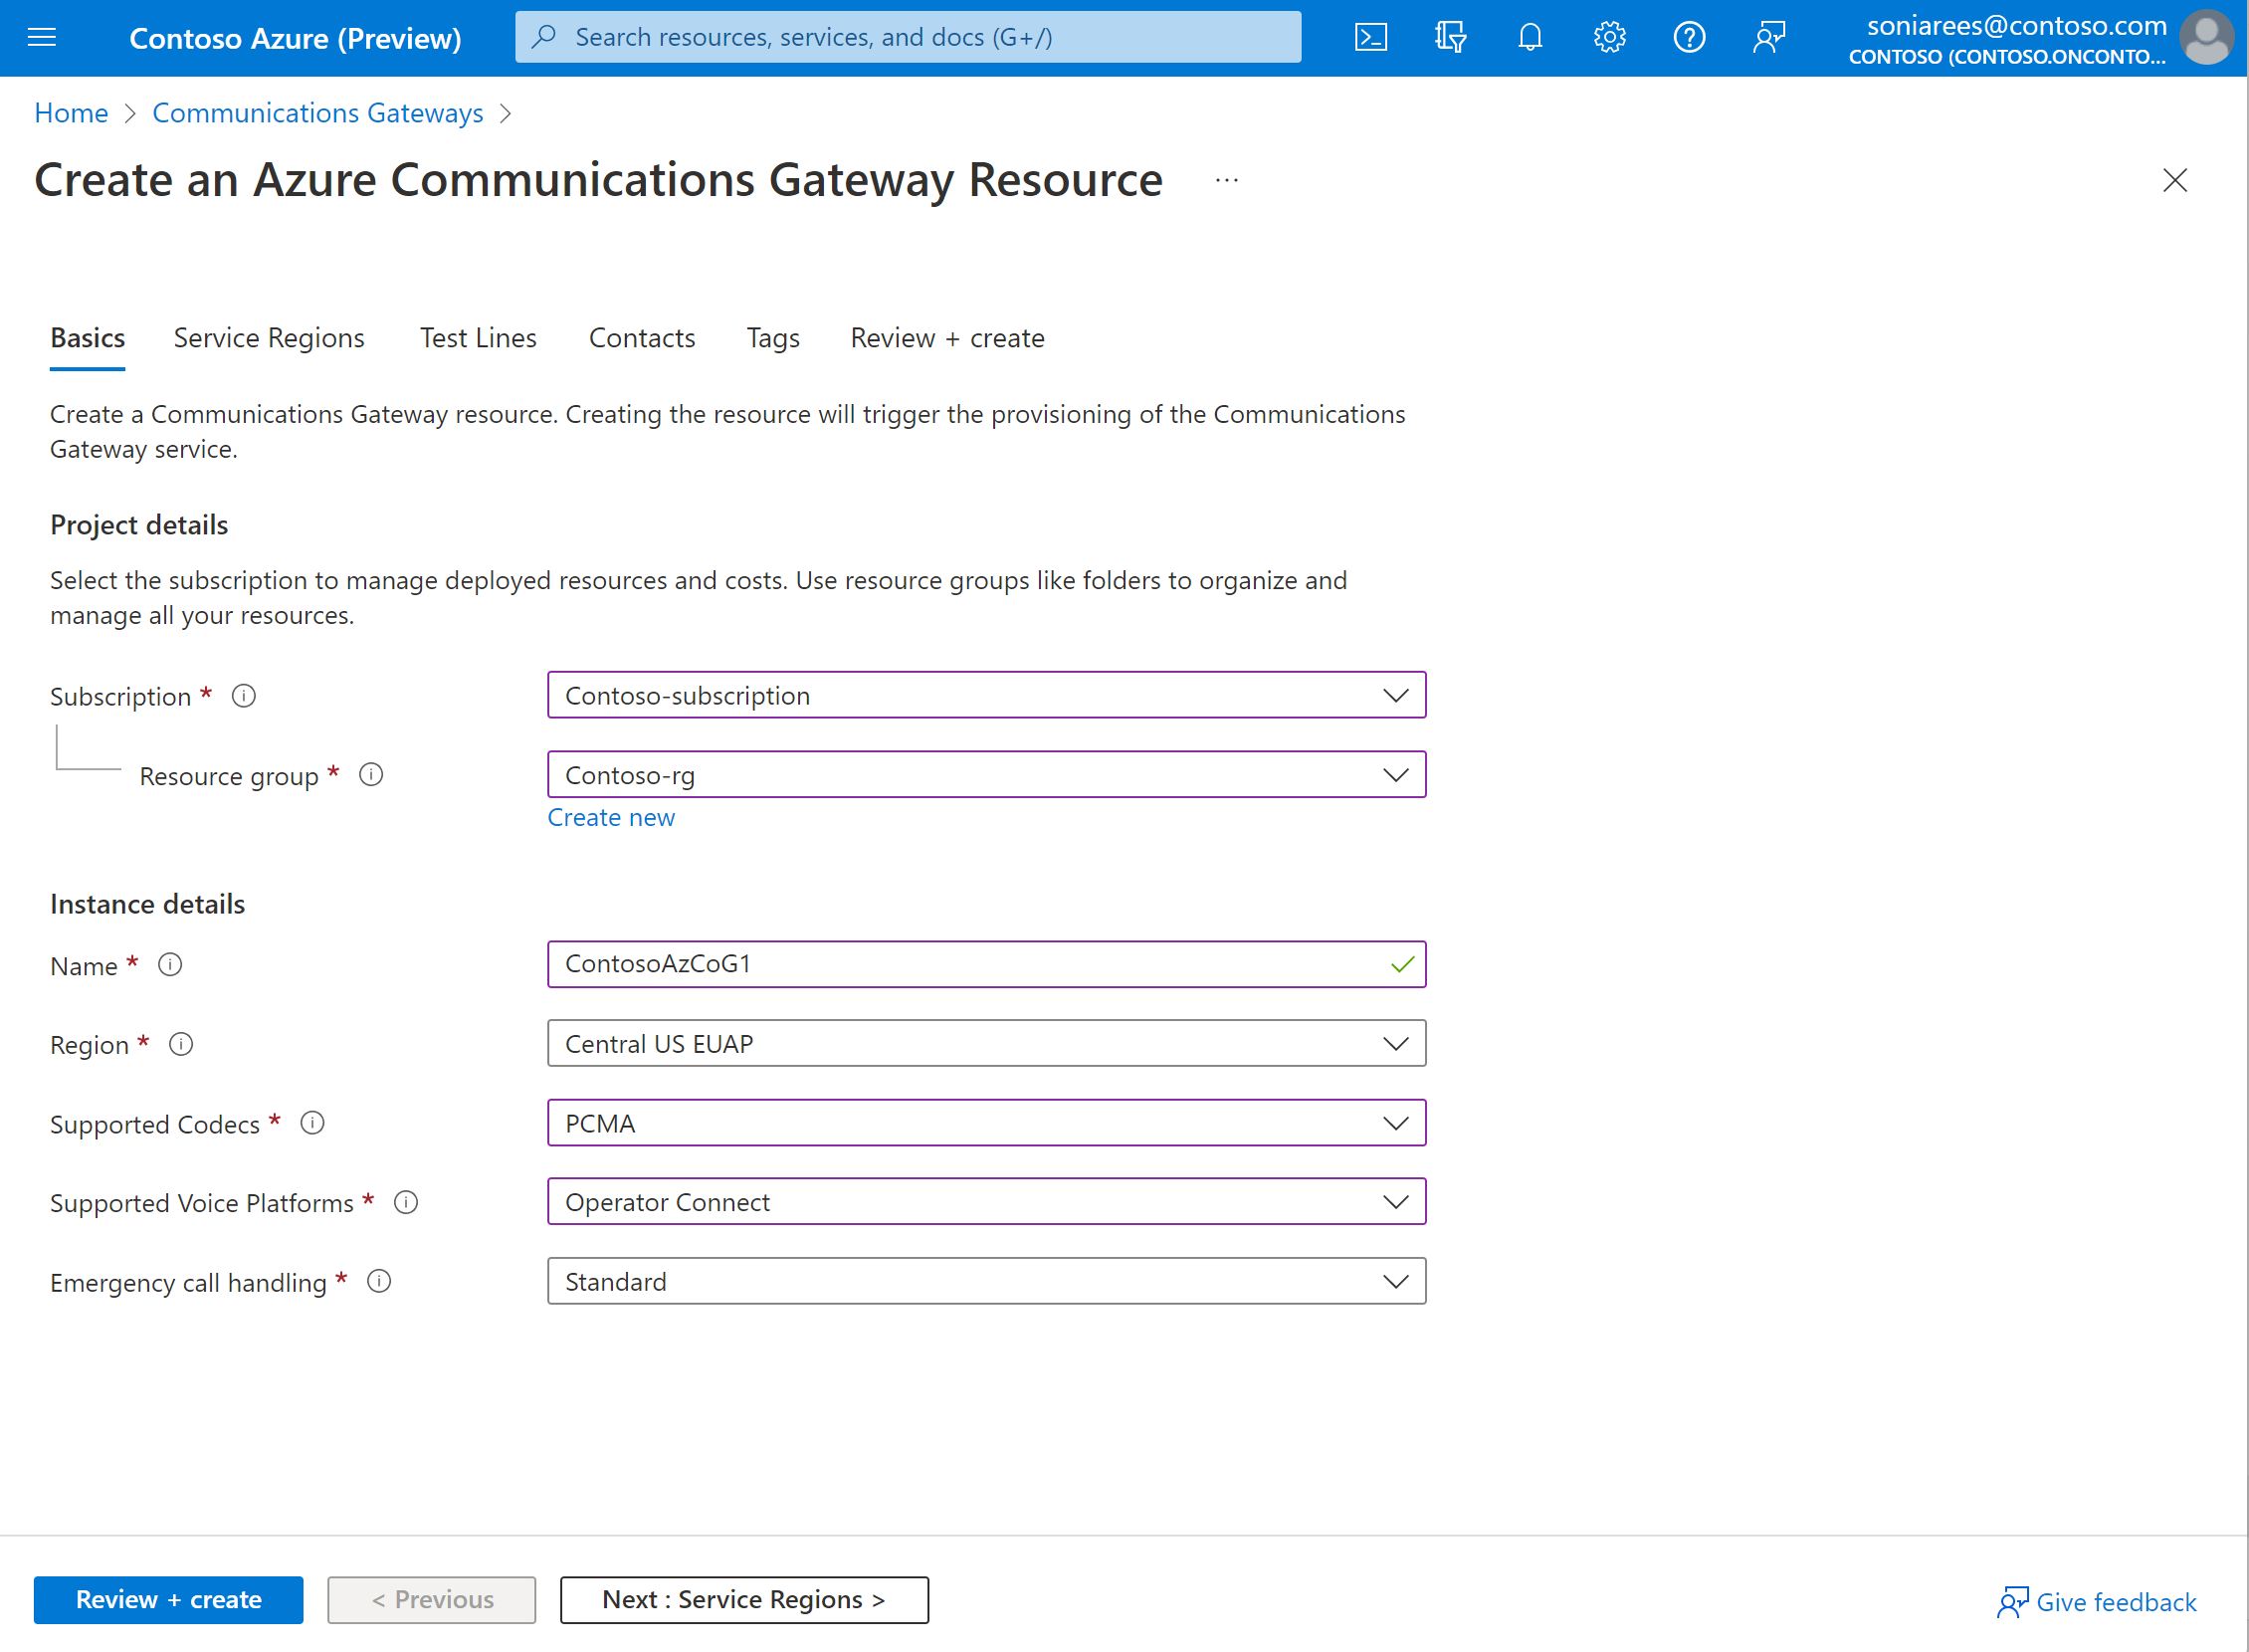 Screenshot of the Create an Azure Communications Gateway portal, showing the Basics section.